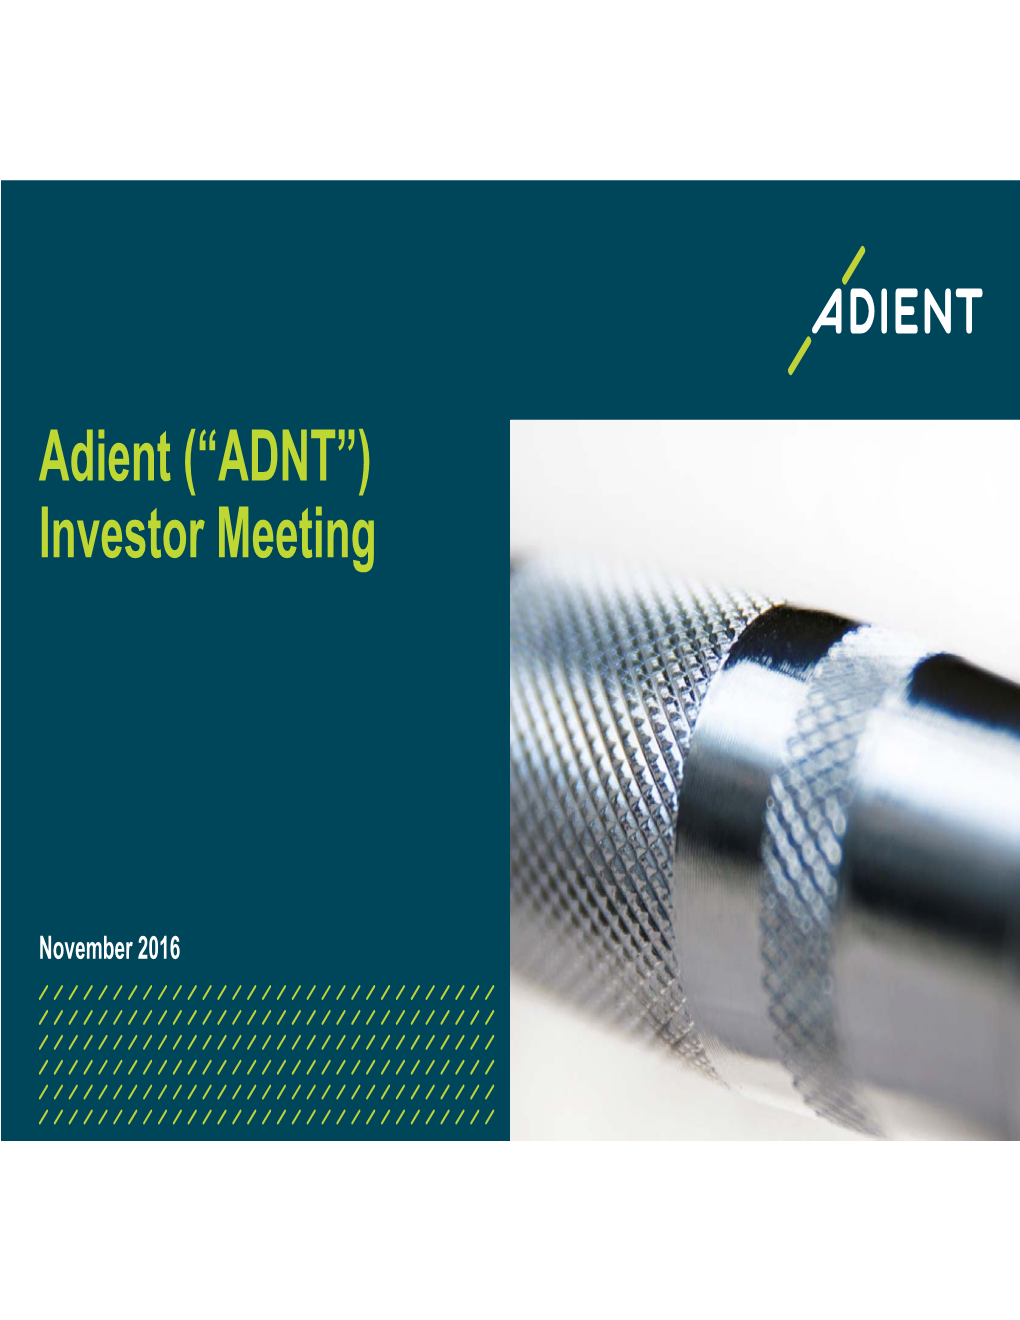 Adient (“ADNT”) Investor Meeting